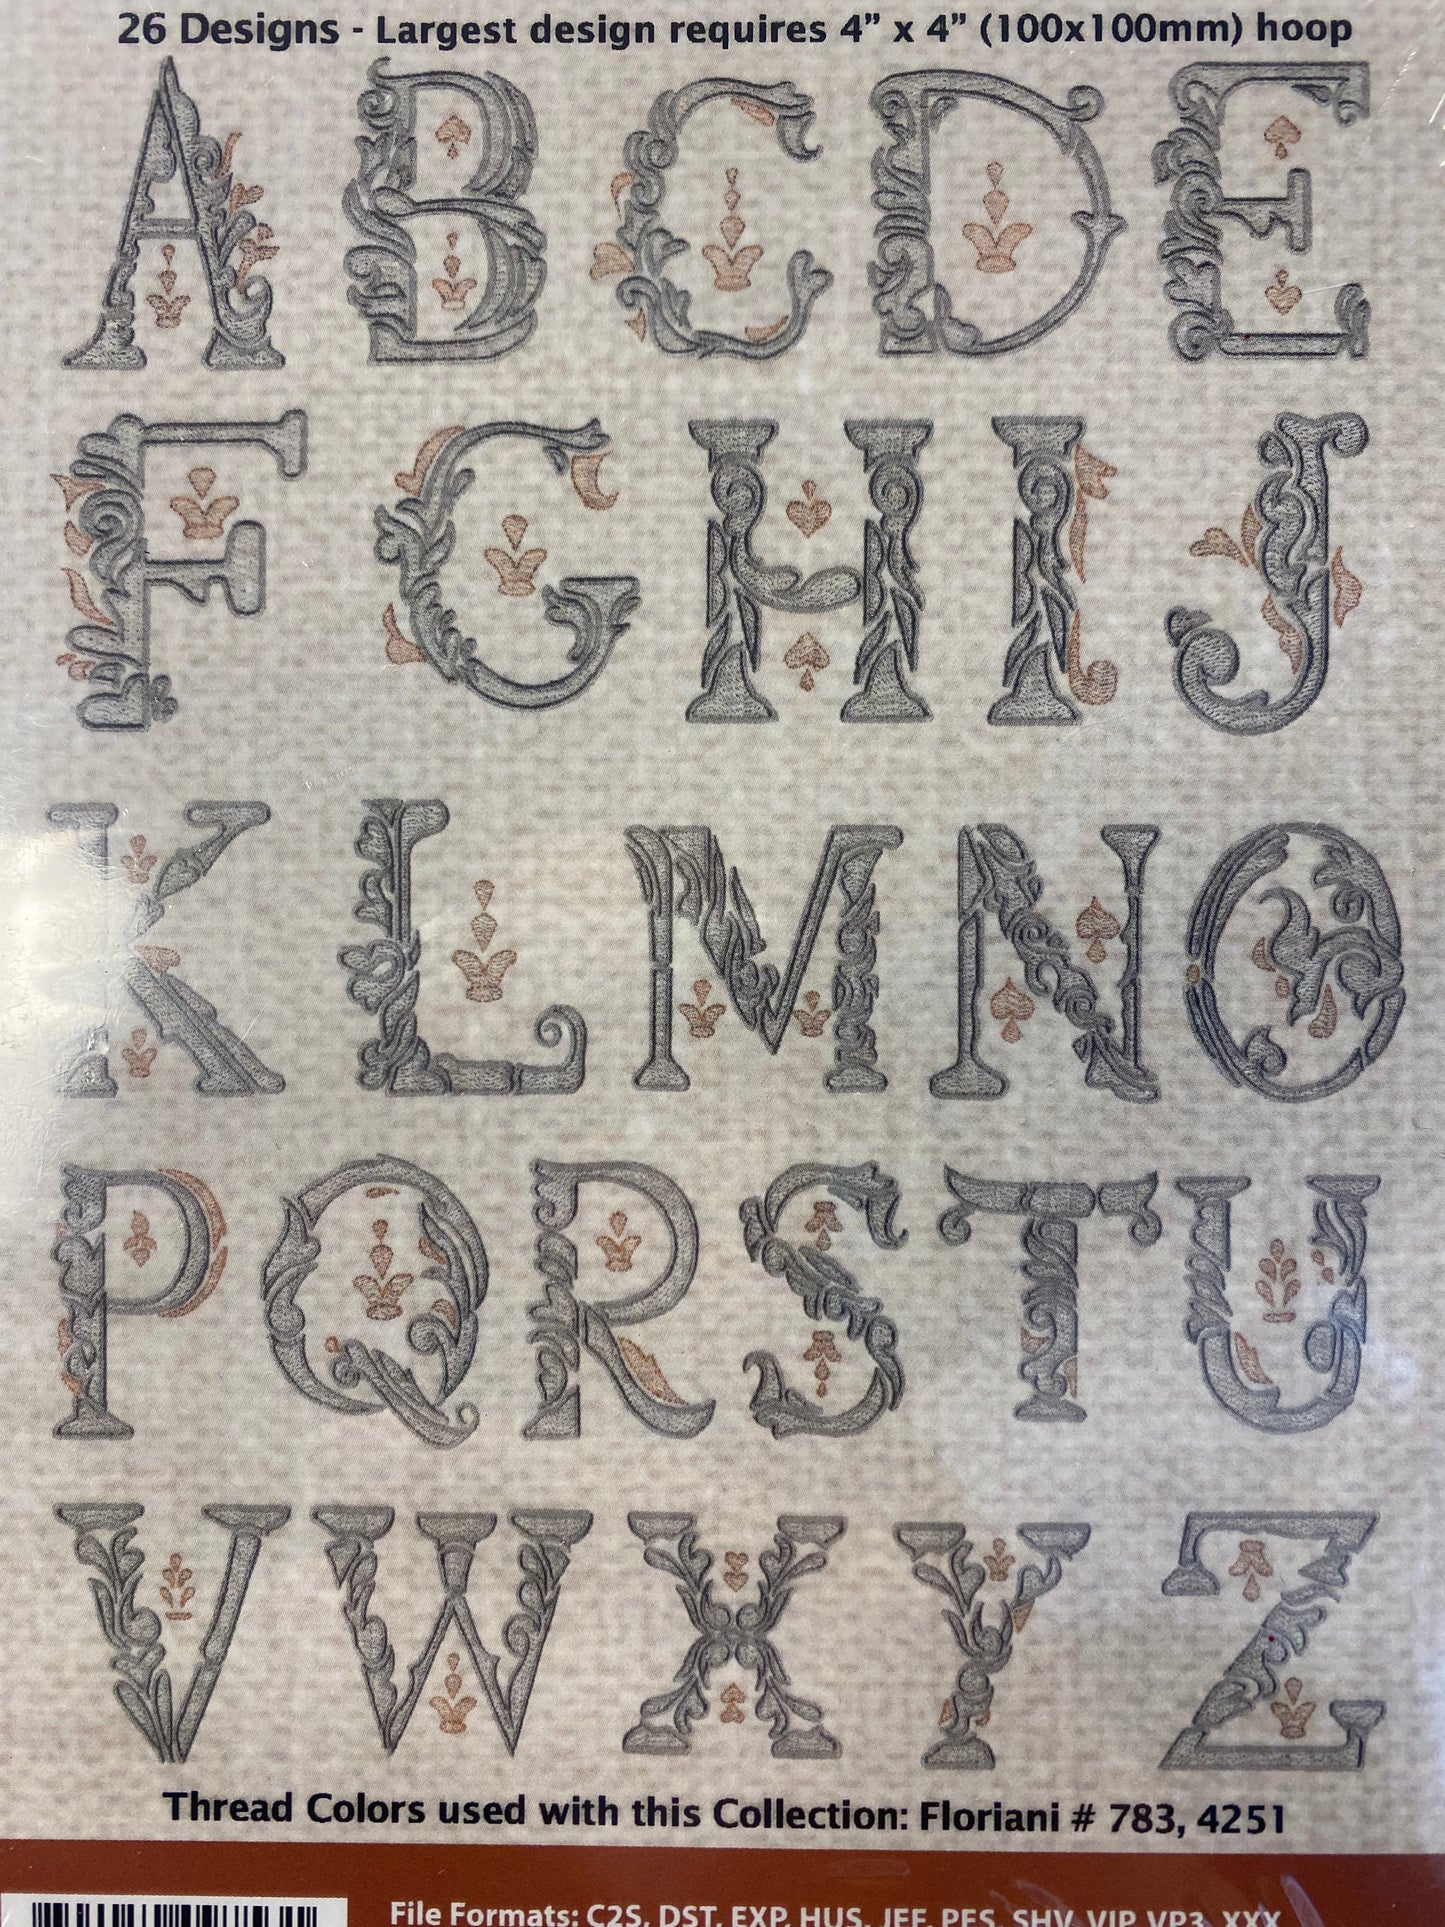 Floriani Embroidery Design, Antique Script Letters